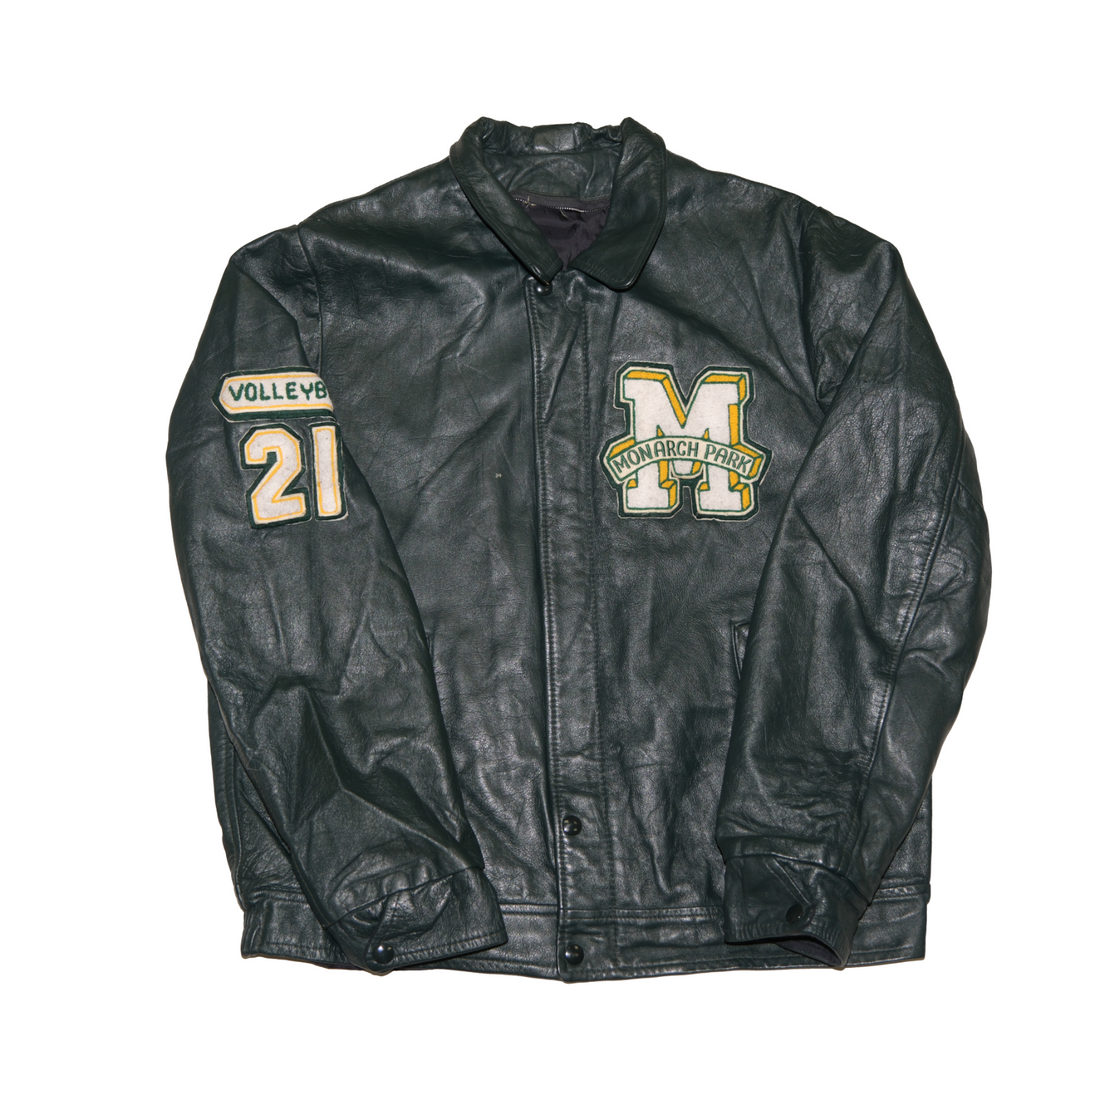 Vintage Monarch Park Volleyball Leather Varsity Jacket Size 44 Green